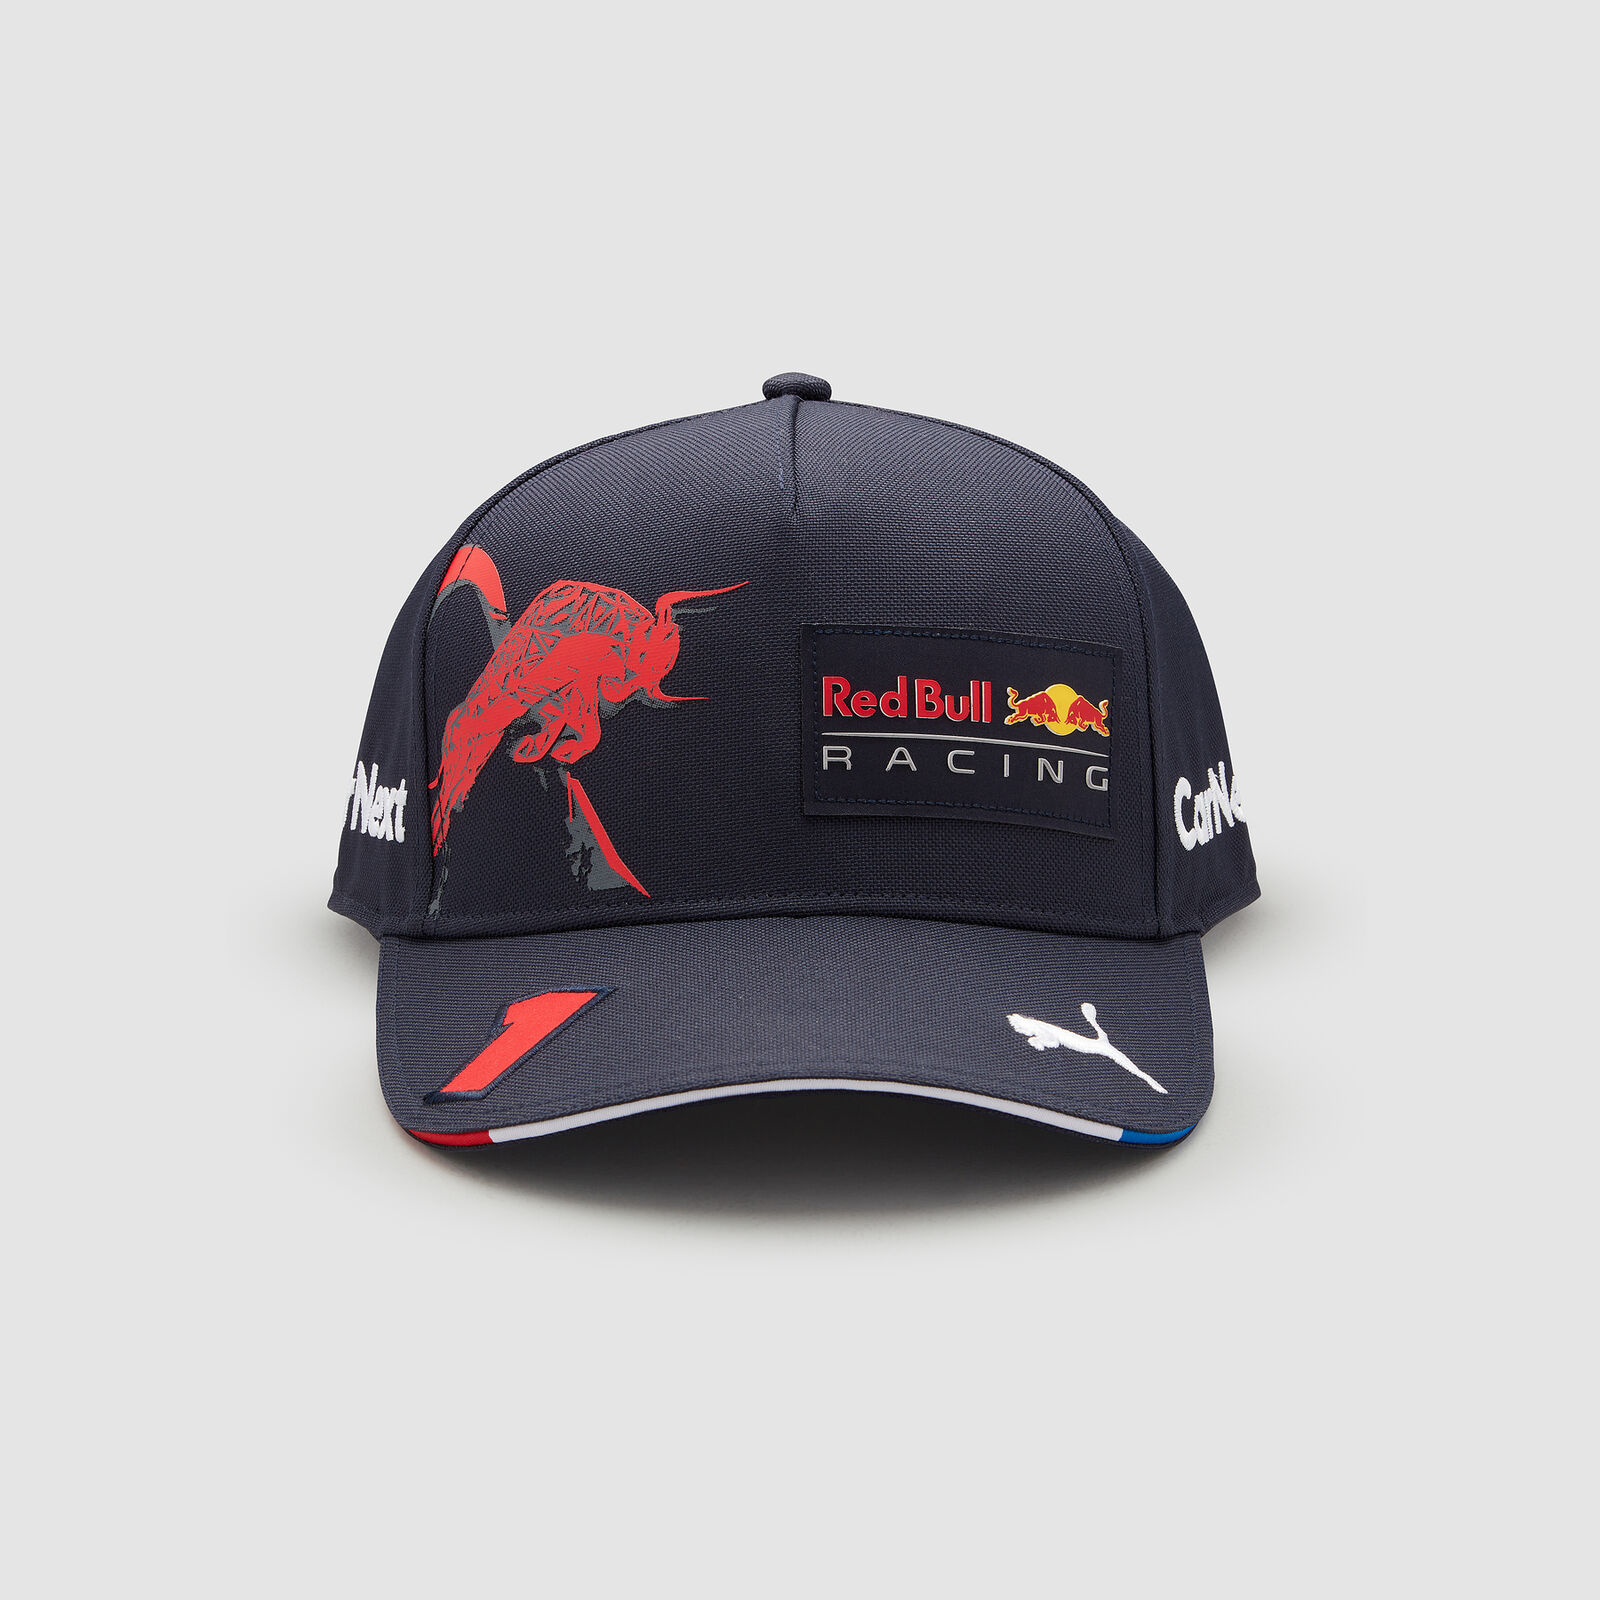 klif Lodge activering Max Verstappen 2022 Team Hat - Red Bull Racing | Fuel For Fans